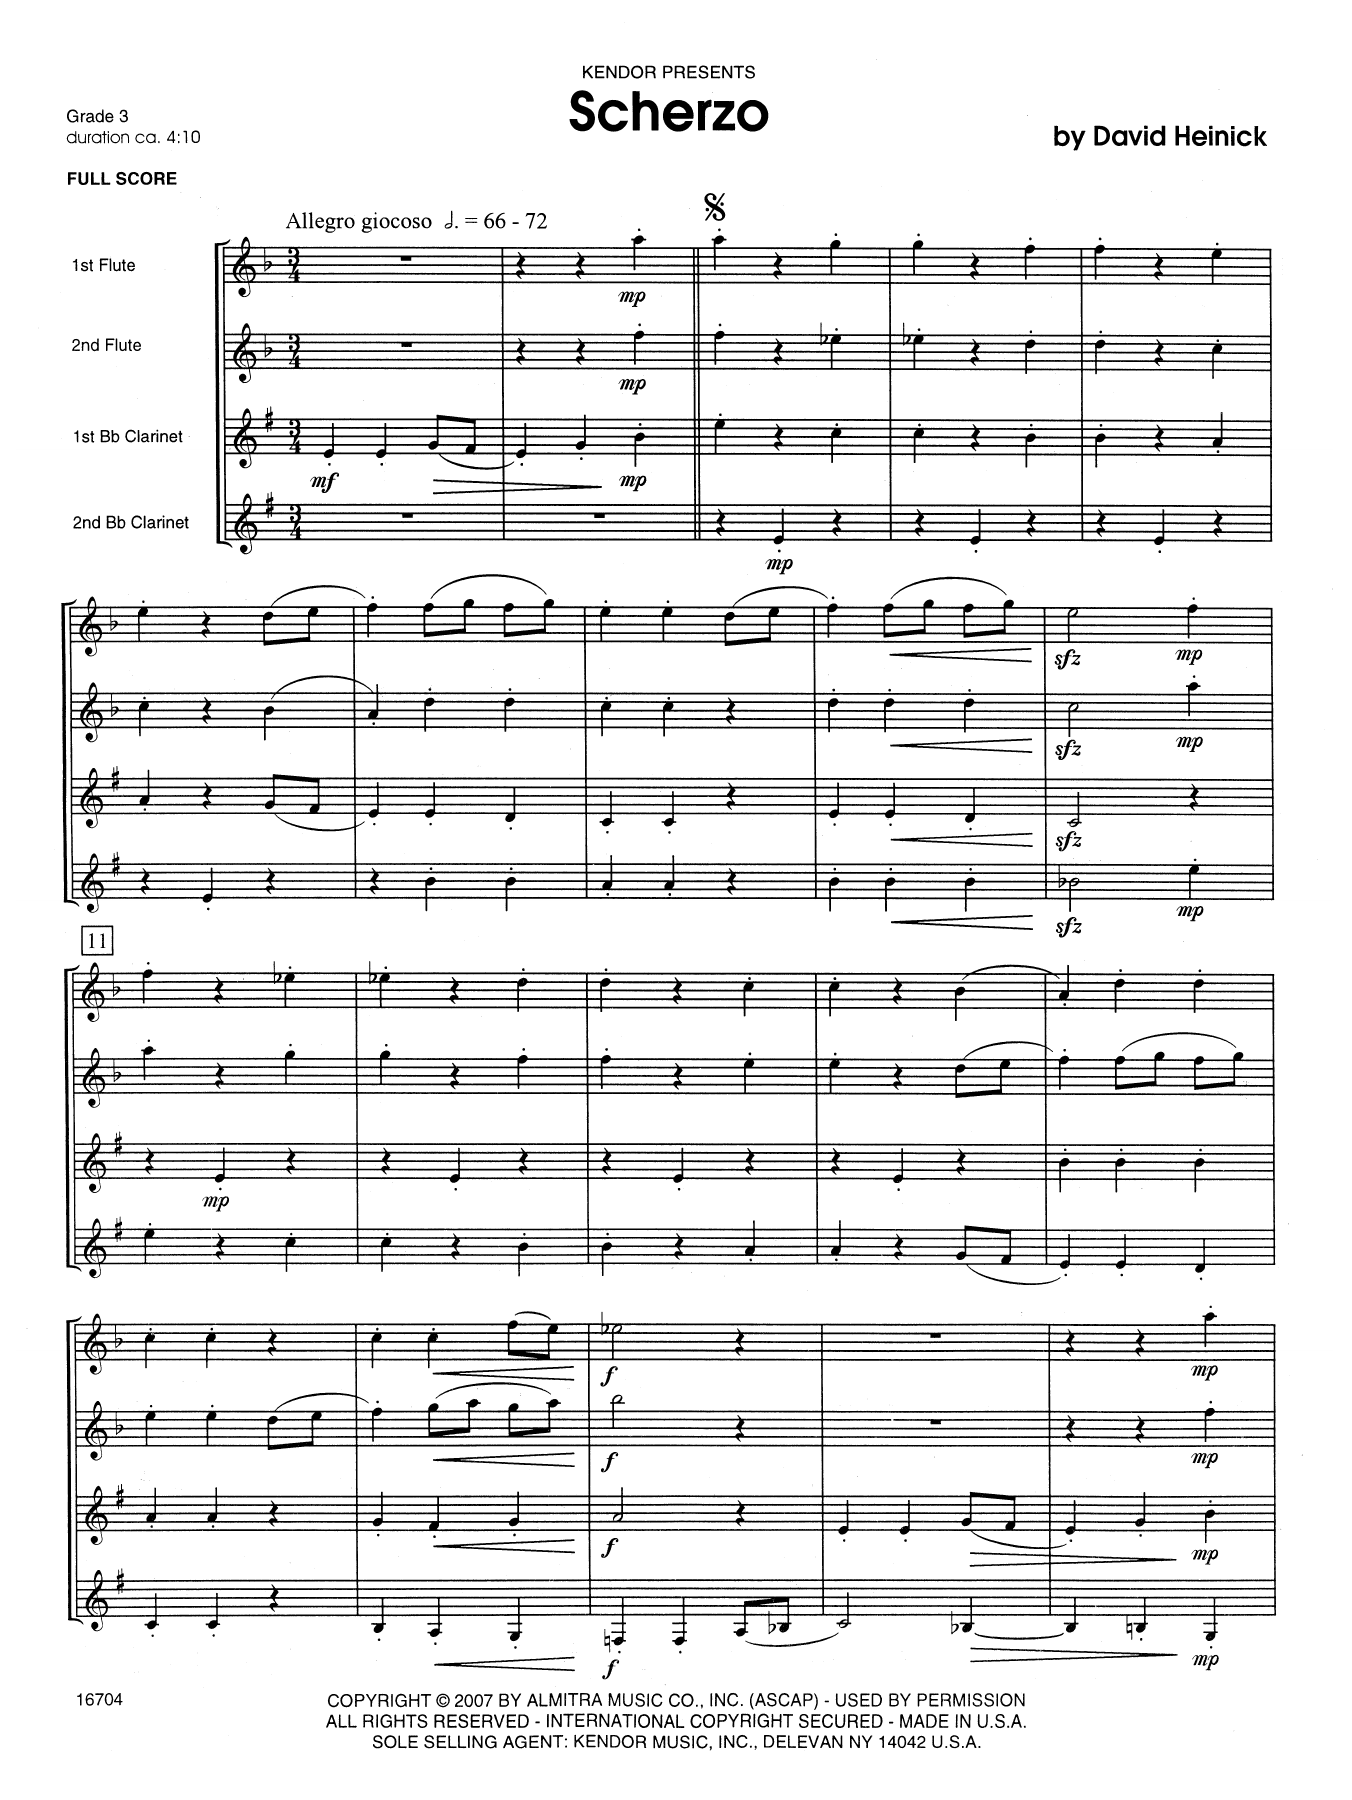 David Heinick Scherzo - Full Score sheet music notes and chords. Download Printable PDF.